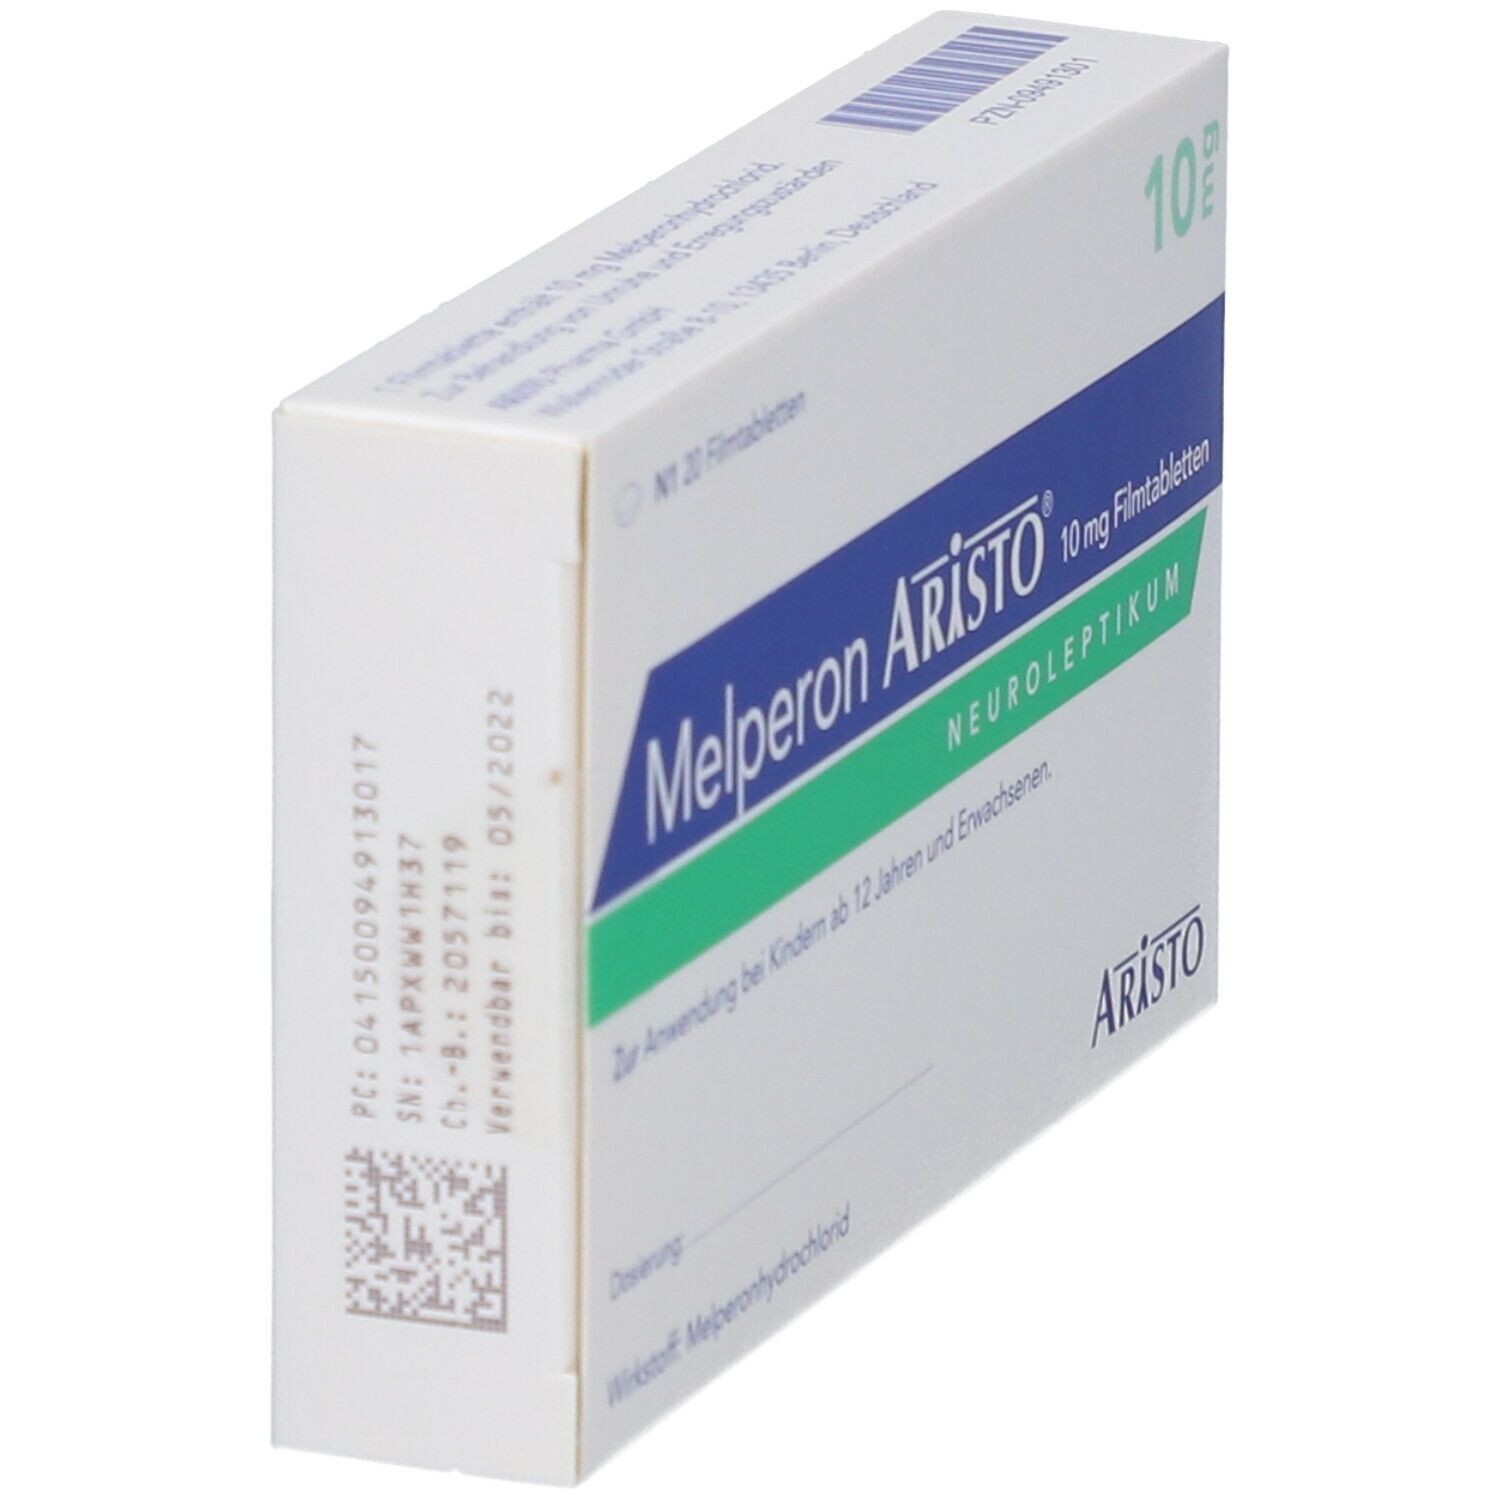 Melperon Aristo® 10 mg